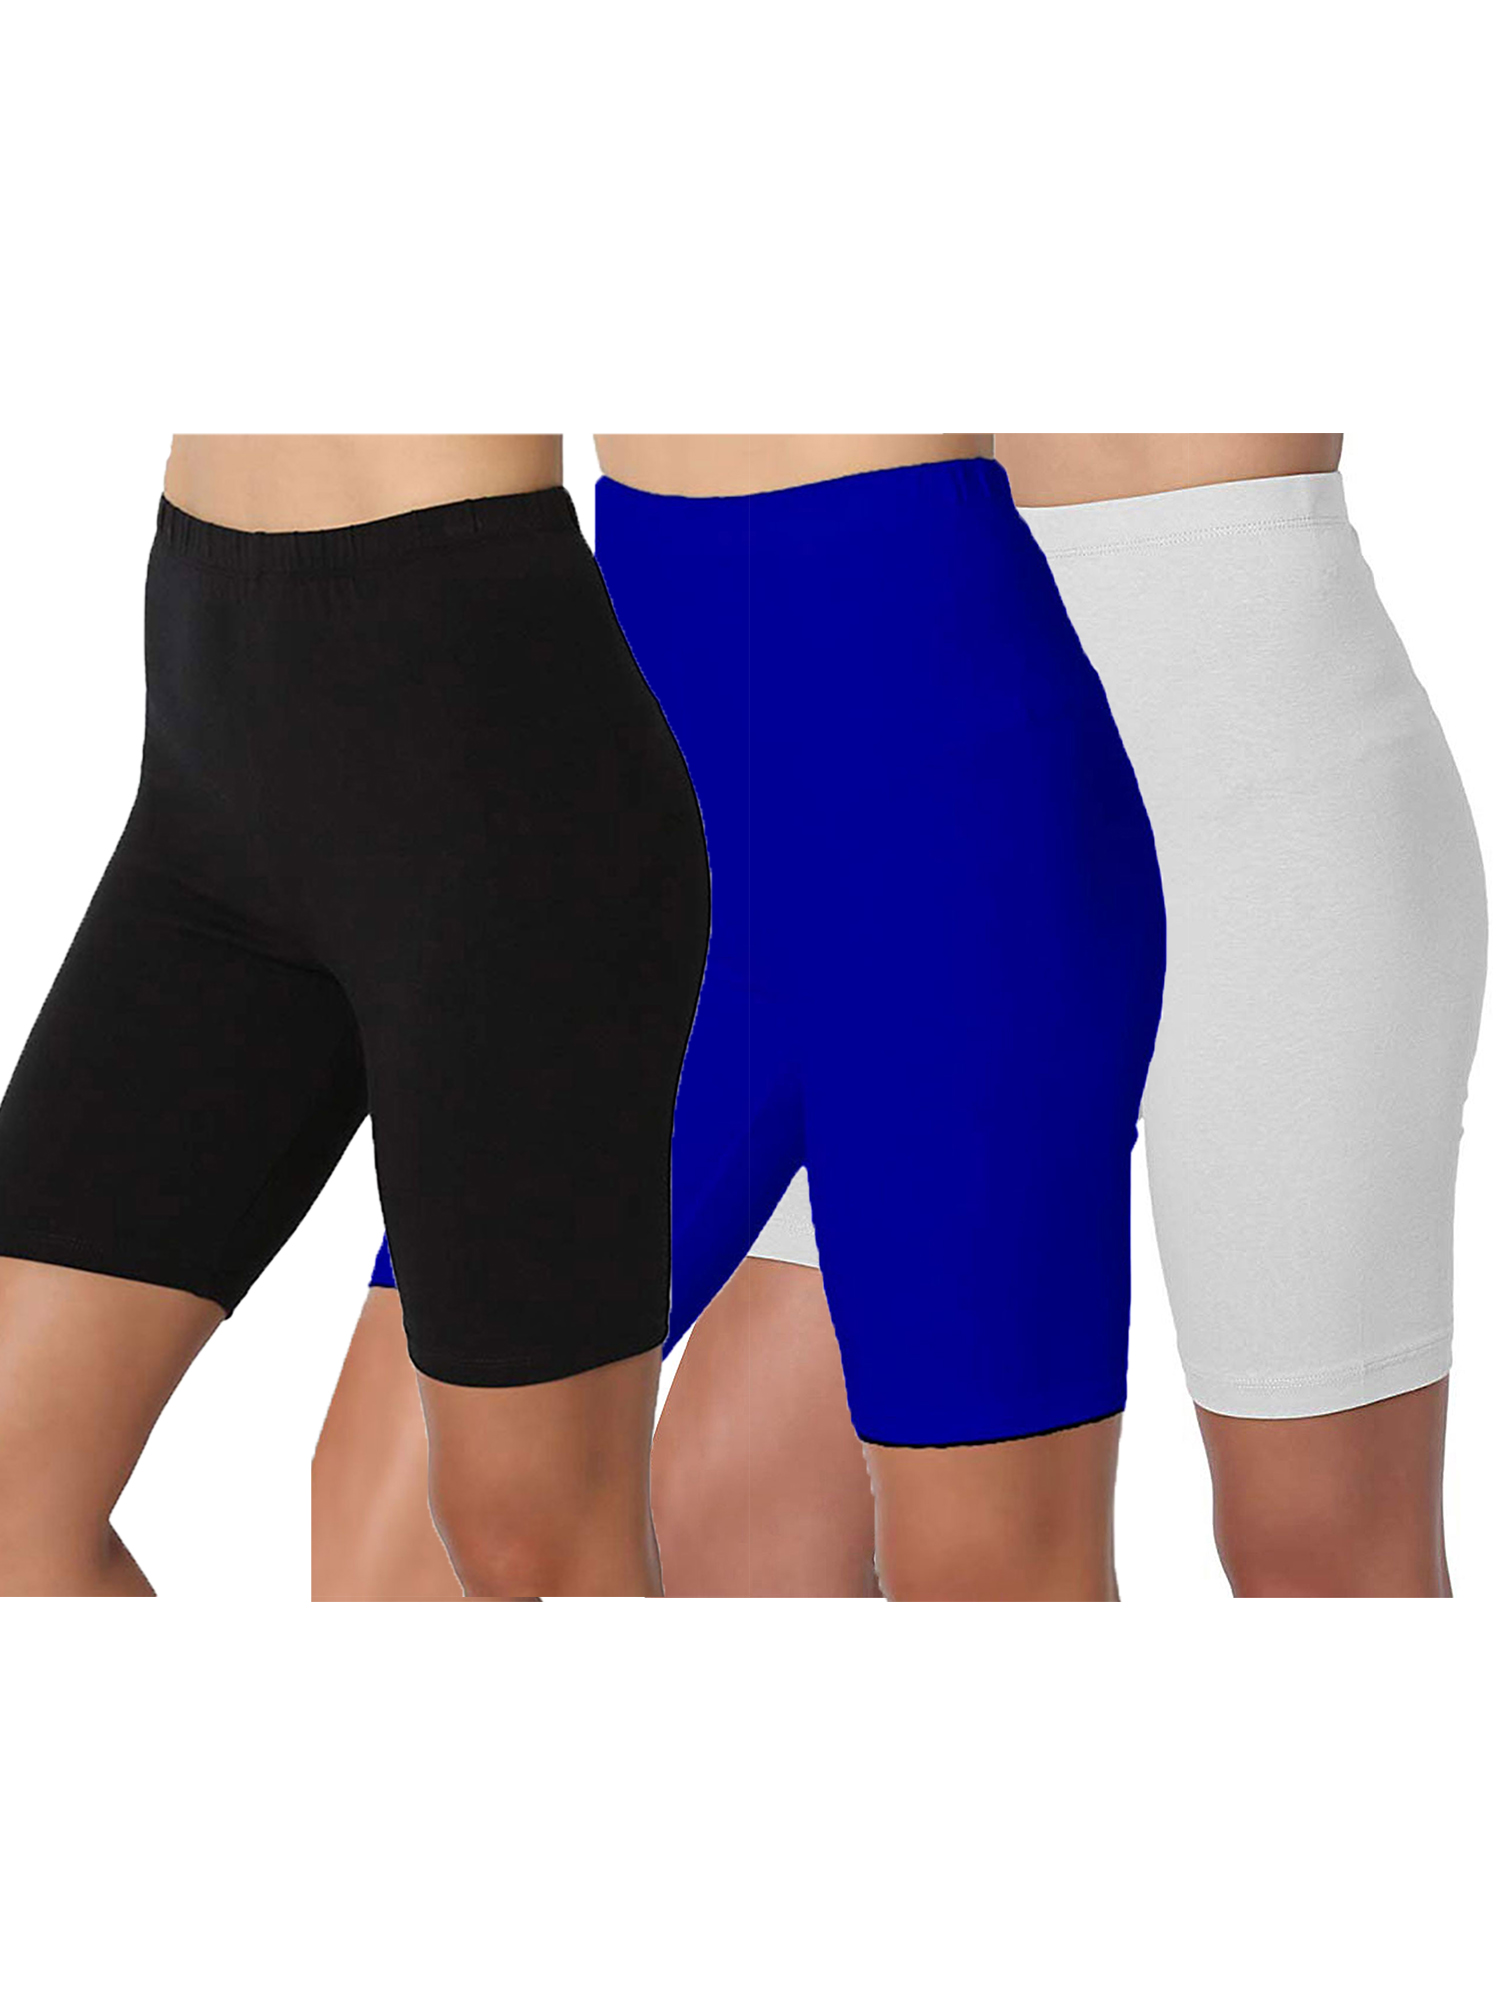 3 Pieces Women Jersey Leggings Shorts Elastic High Waist Summer Beach Casual Yoga Hot Pants Ladies Running Gym Yoga Hot Pants Lounge Baggy Shorts Pants Biker Shorts - image 1 of 5